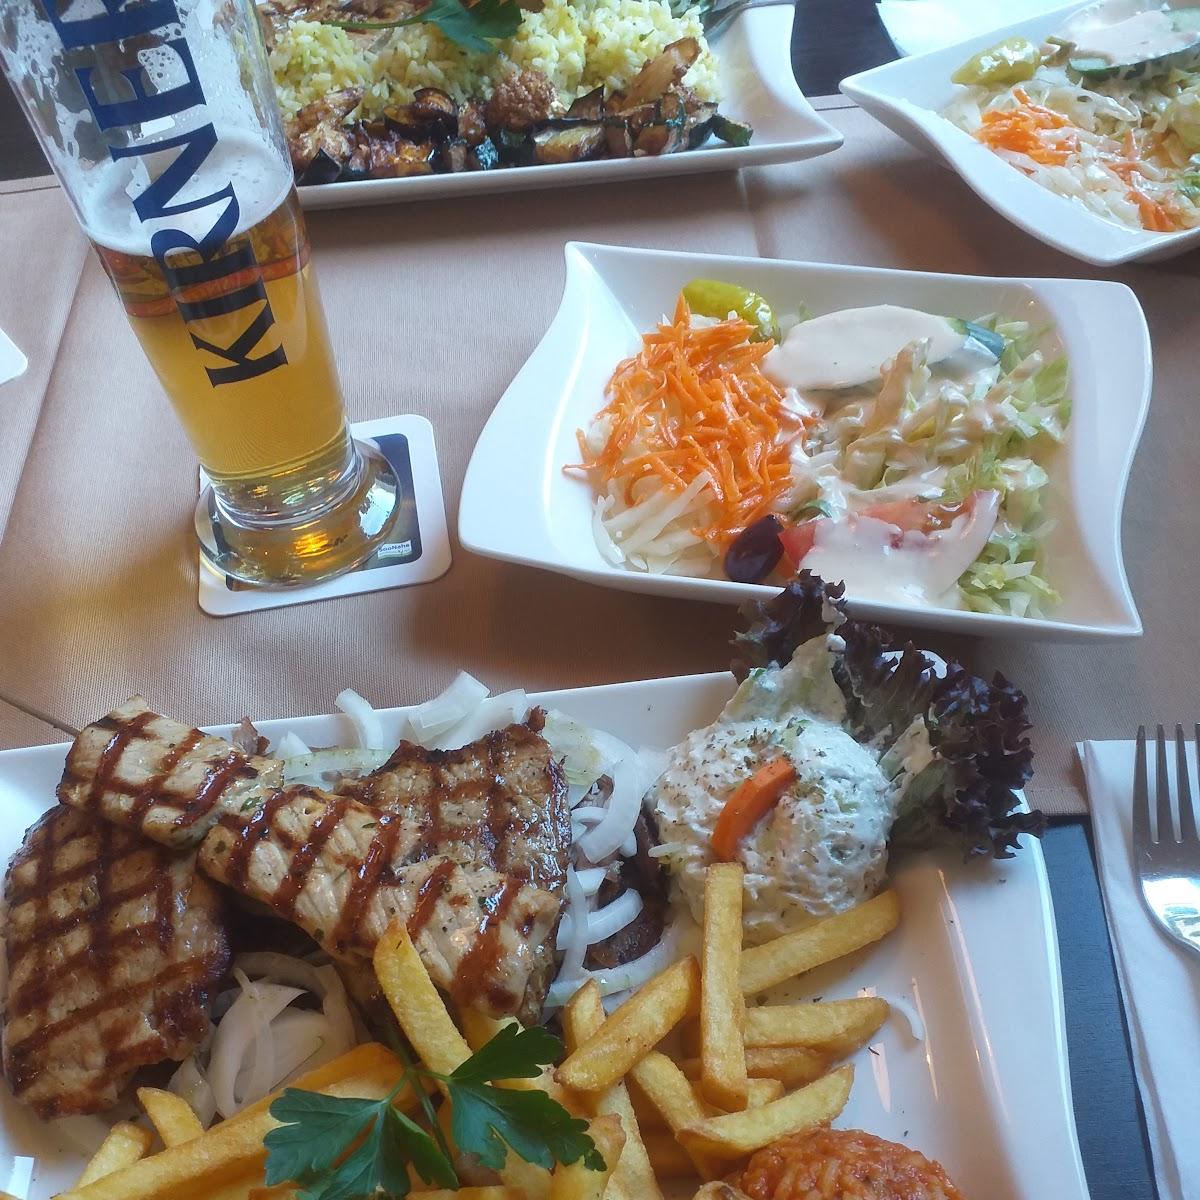 Restaurant "Eat Happy" in Bad Sobernheim